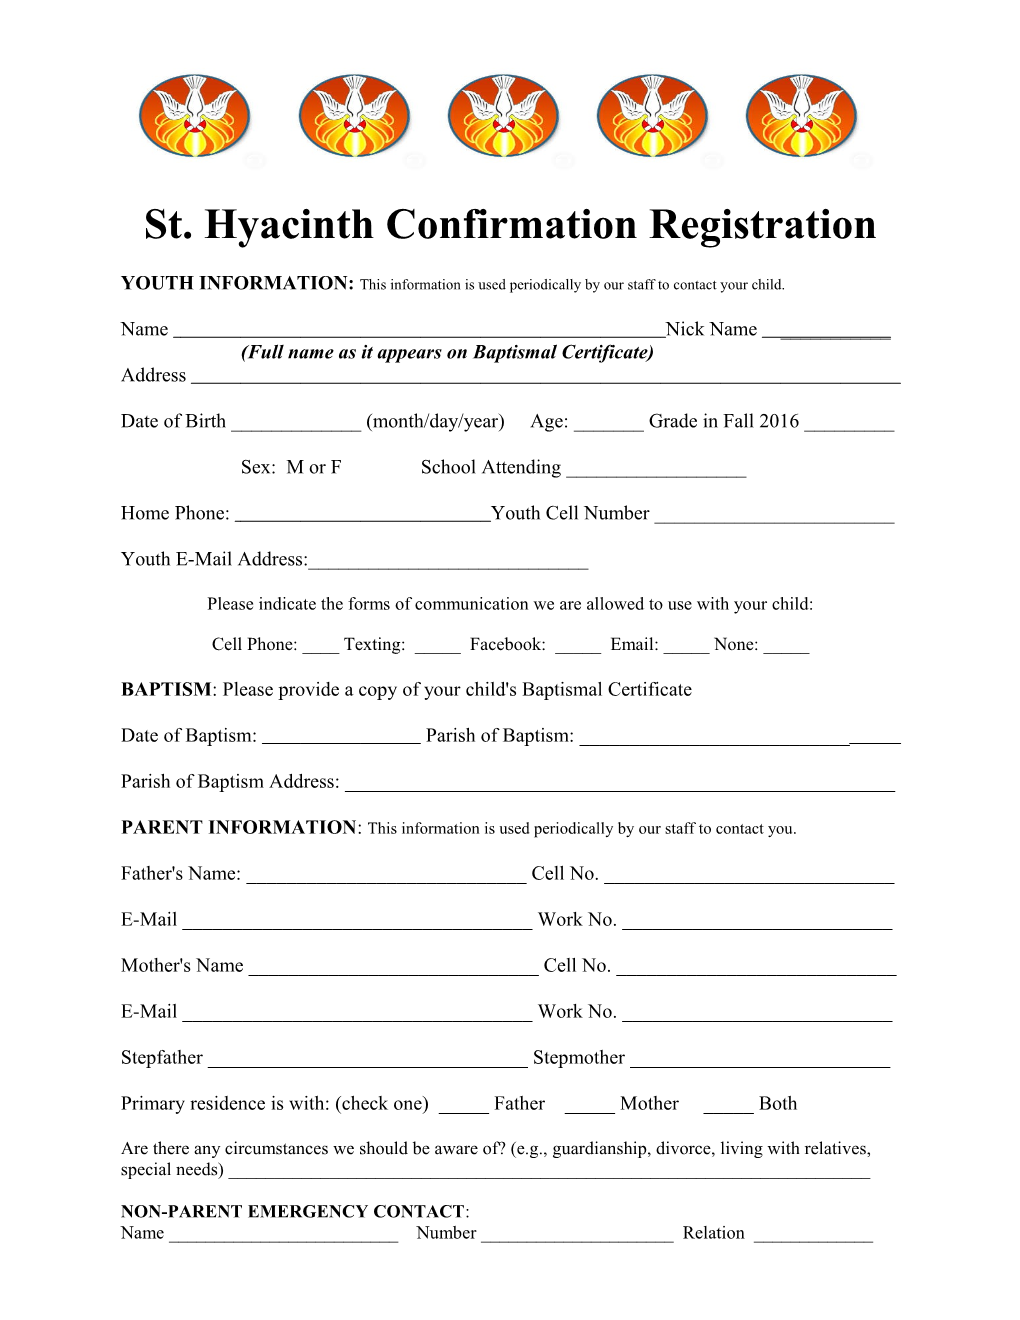 St. Hyacinth Confirmation Registration